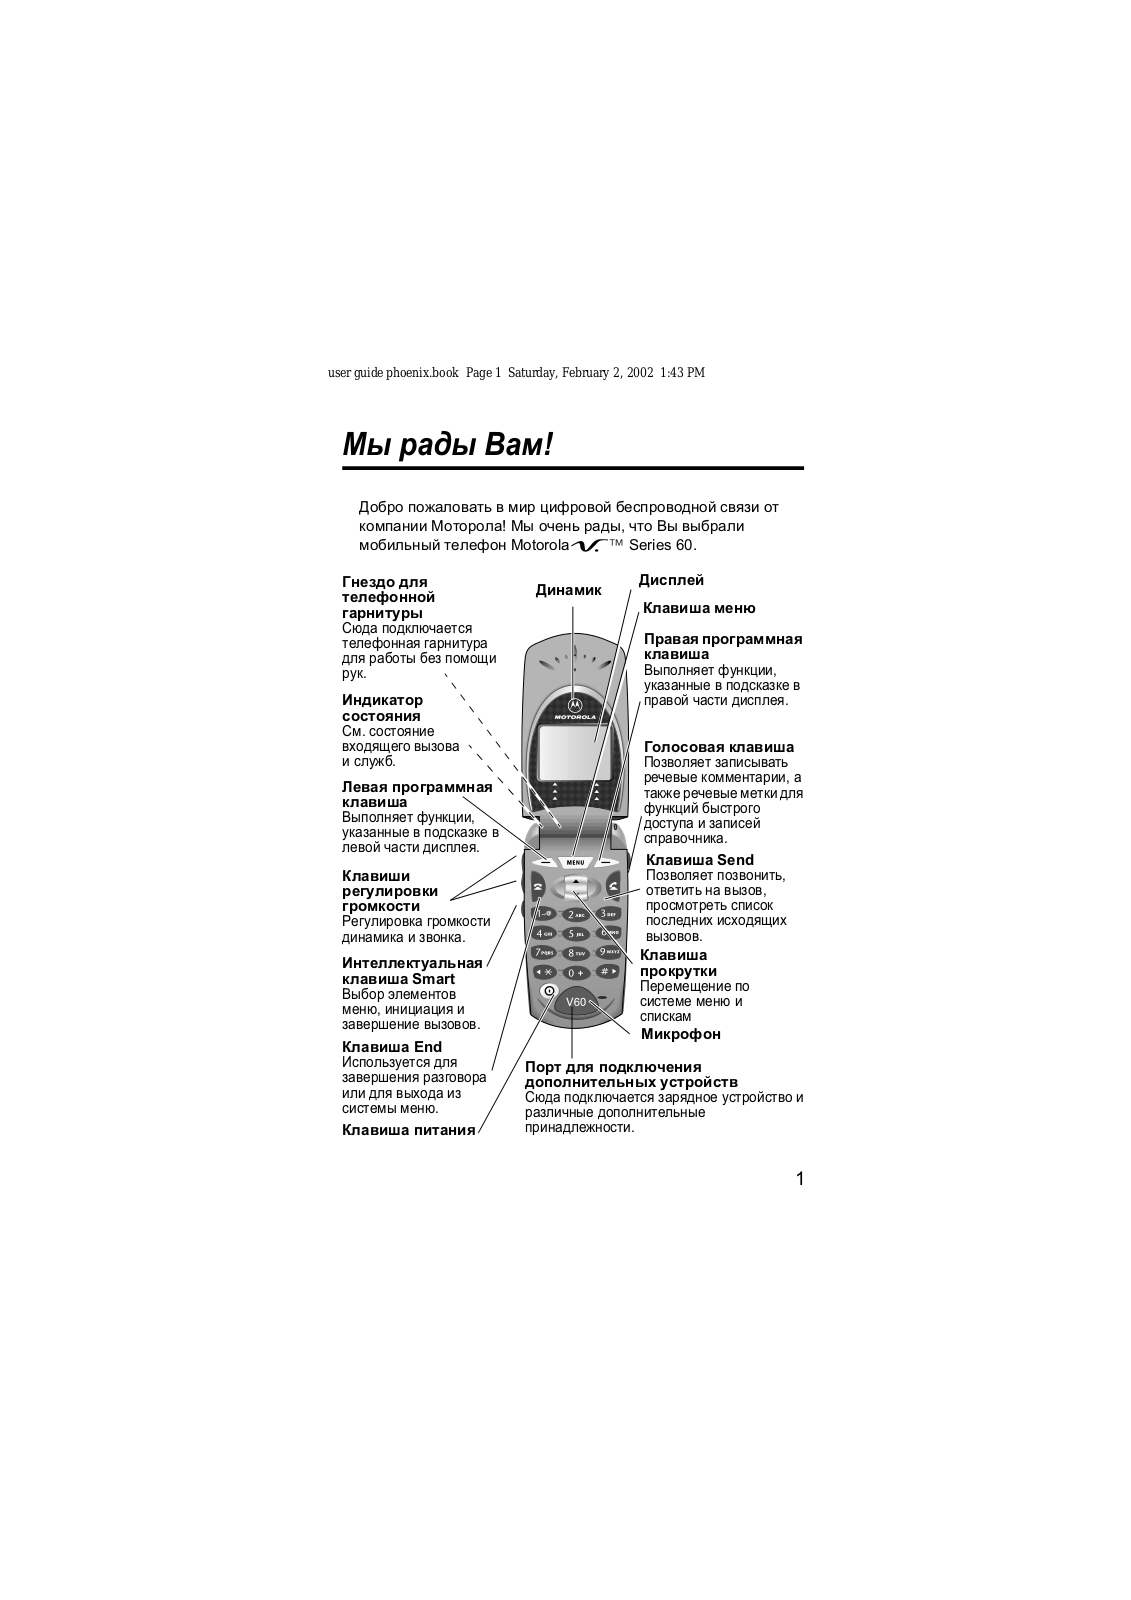 Motorola V60 User Manual